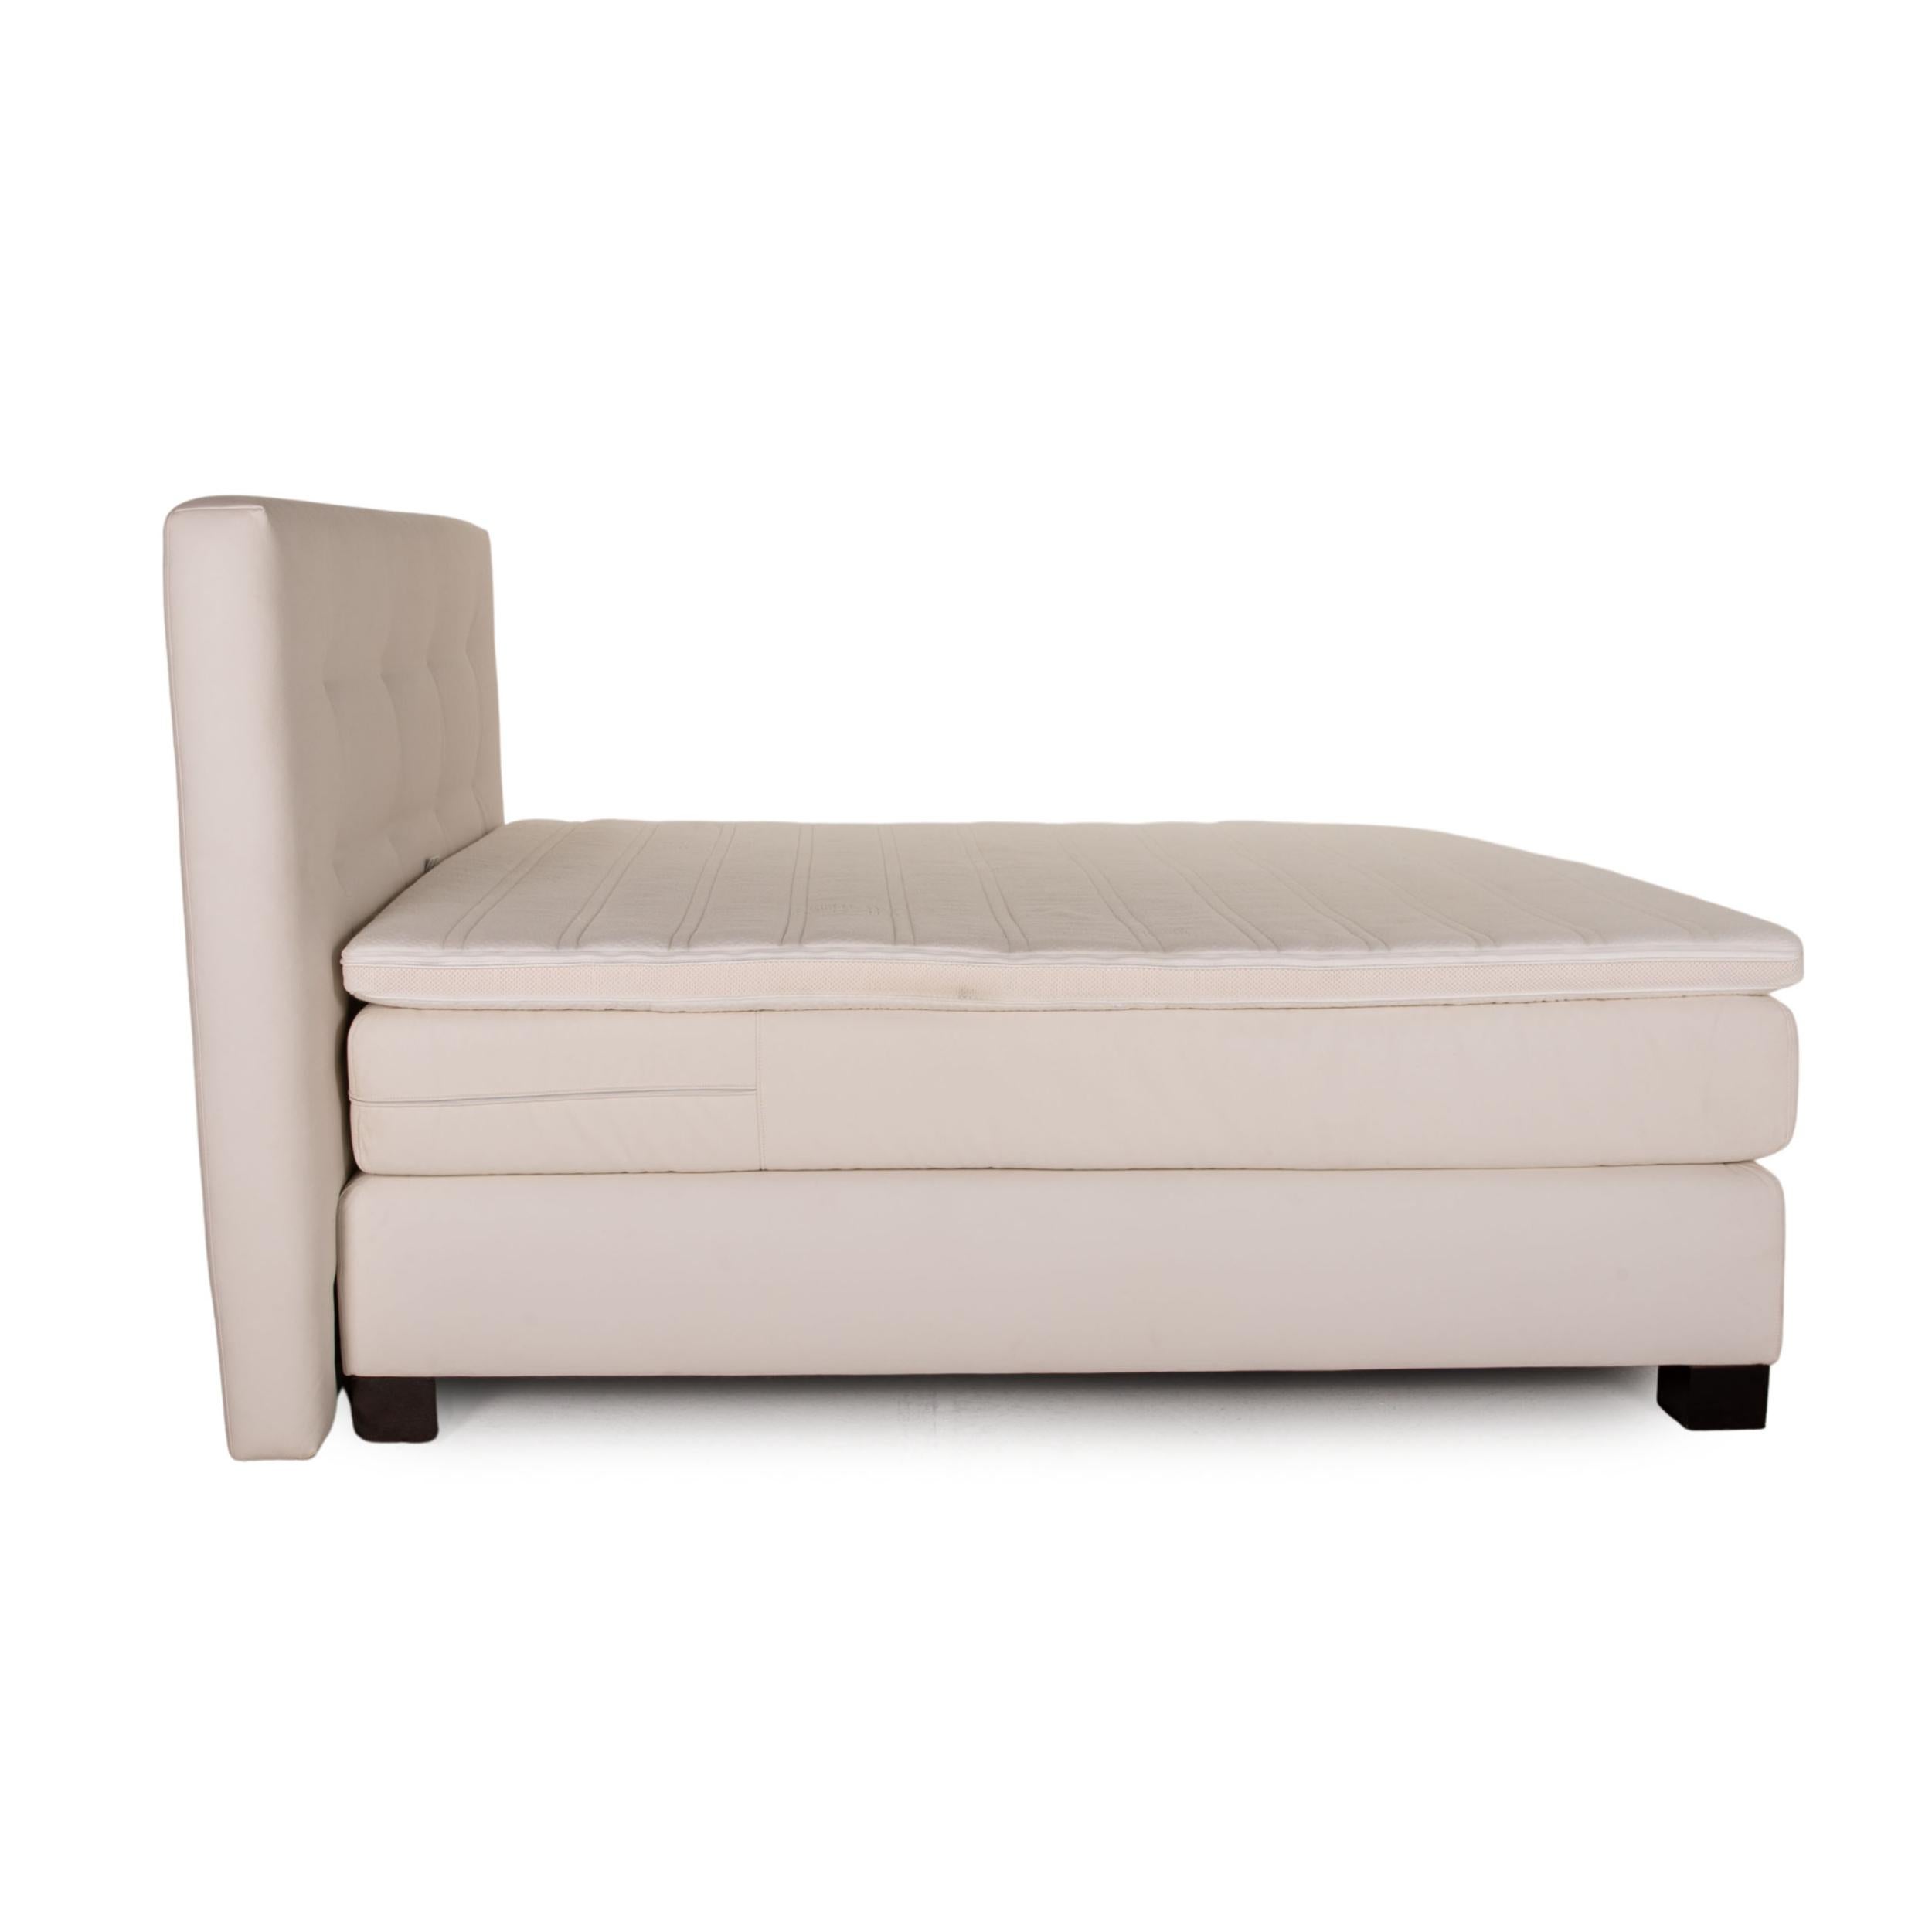 Modern Velda Metropolitan Fabric Bed White Box Spring Bed For Sale